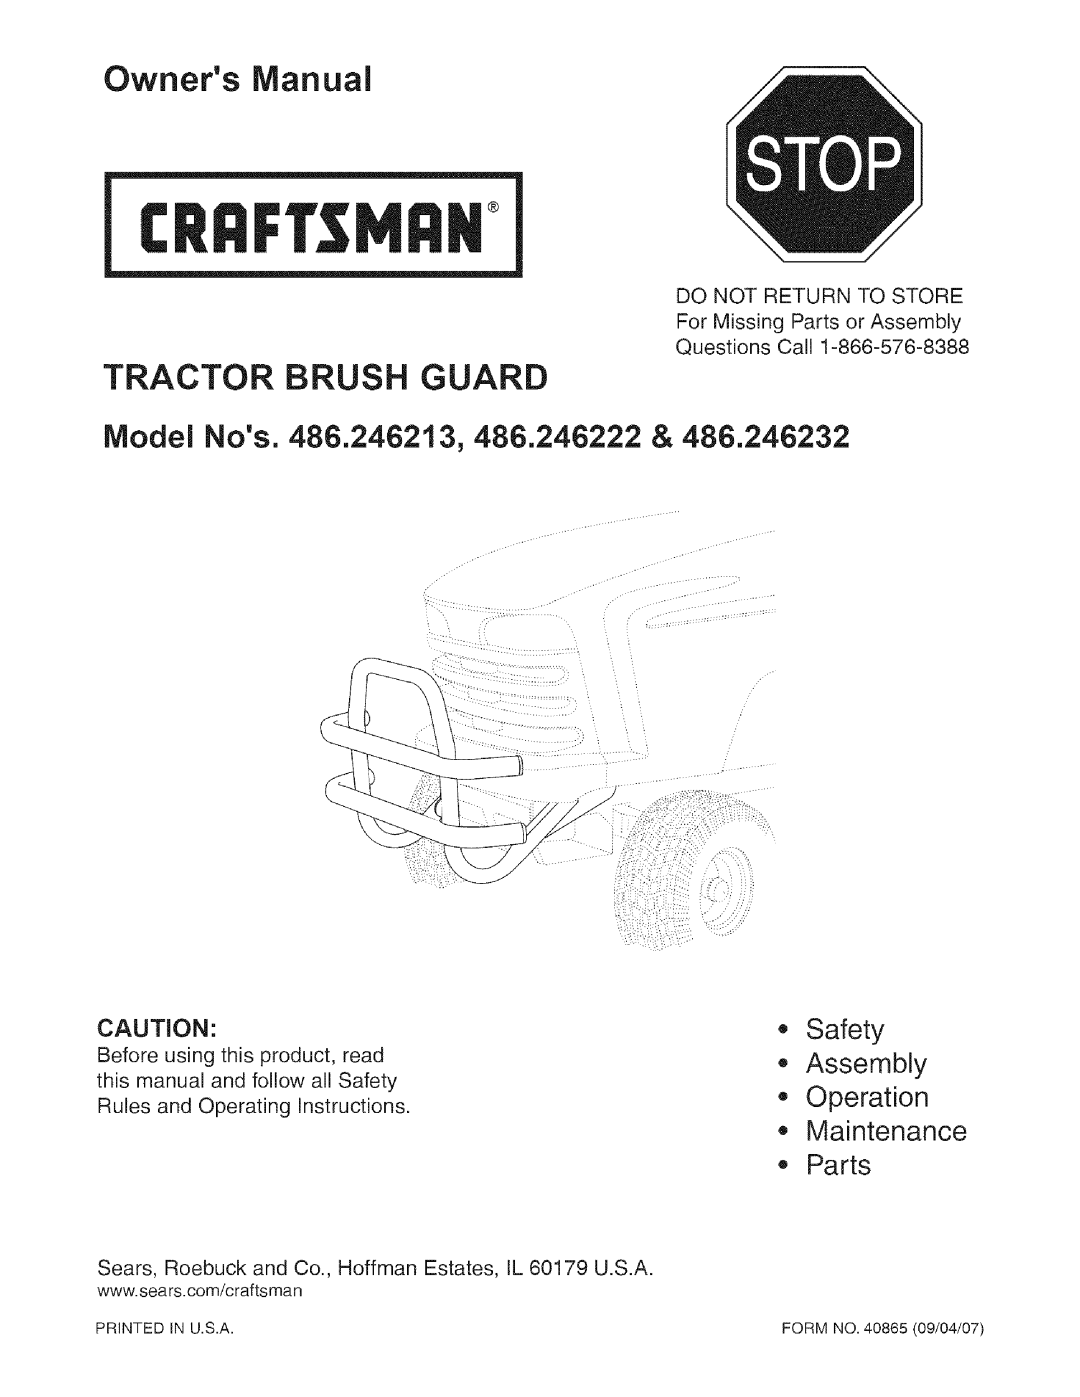 Craftsman 486.246213 owner manual Safety Assembly Operation Maintenance Parts, I RRFrSMRH, Tractor Brush Guard, Model Nos 